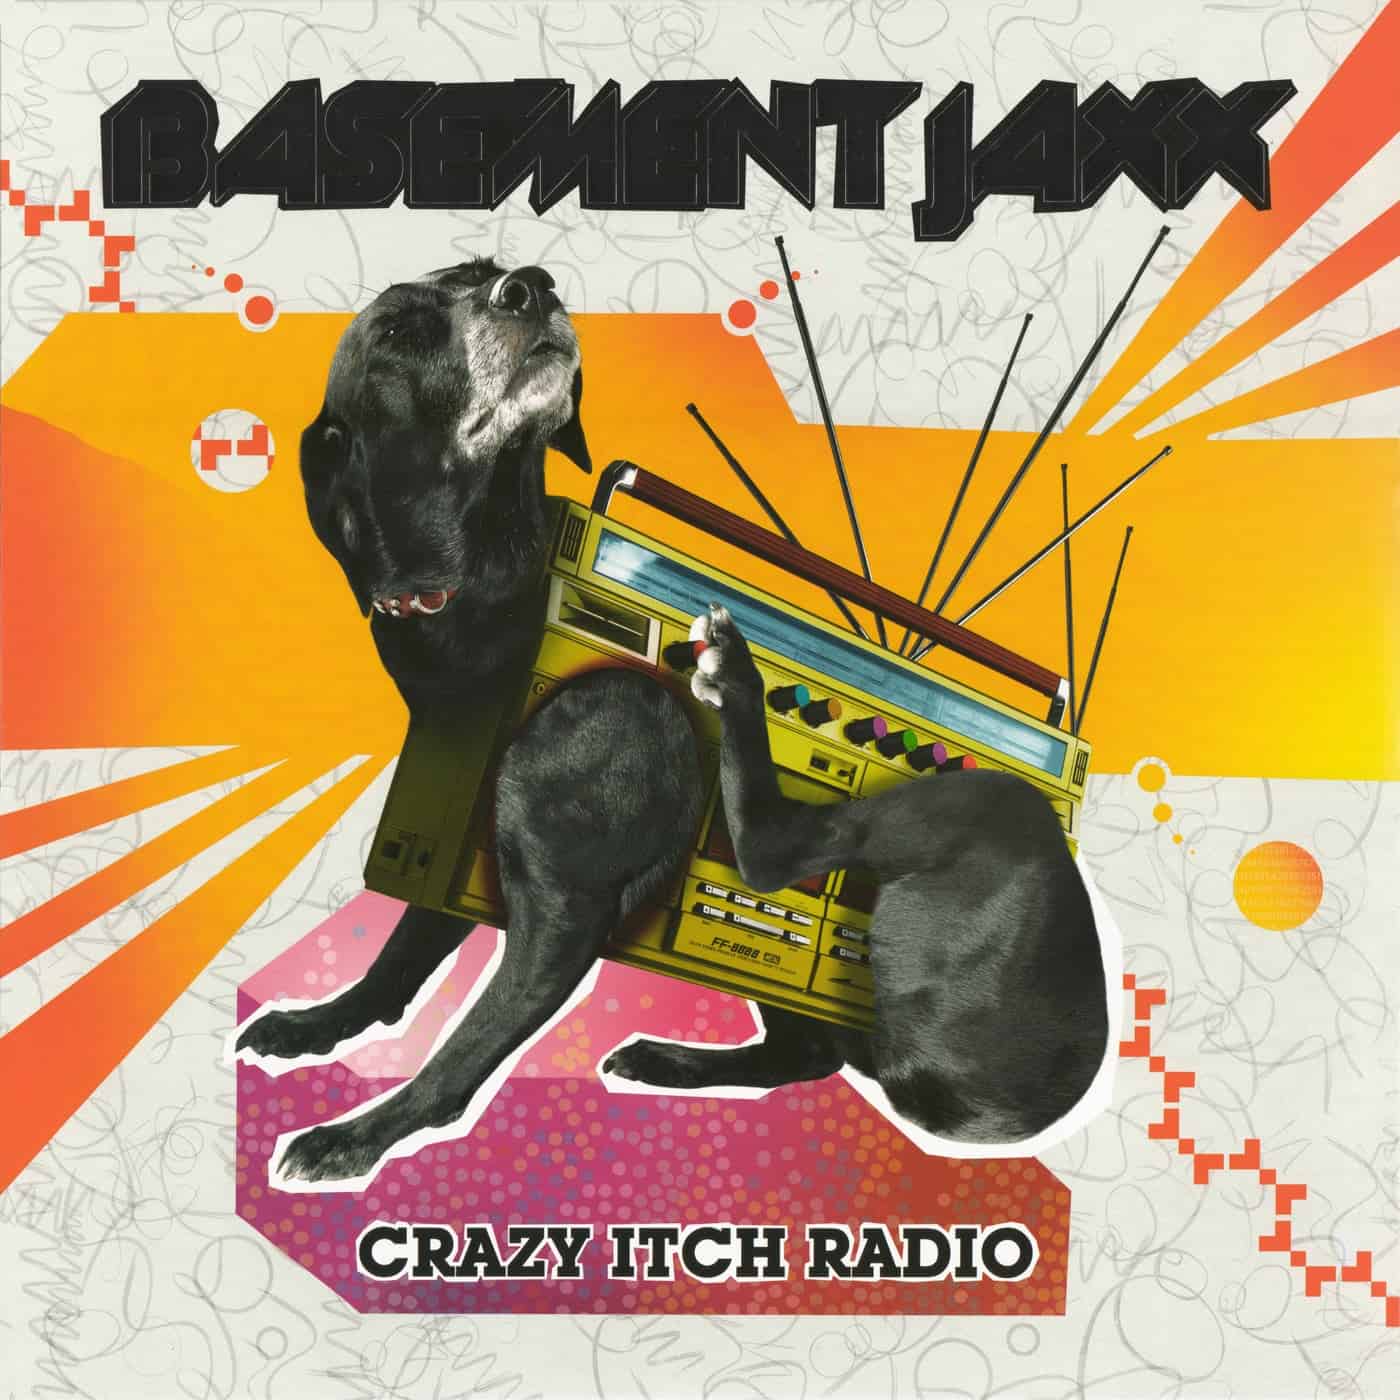 image cover: Basement Jaxx - Crazy Itch Radio / XLDL205